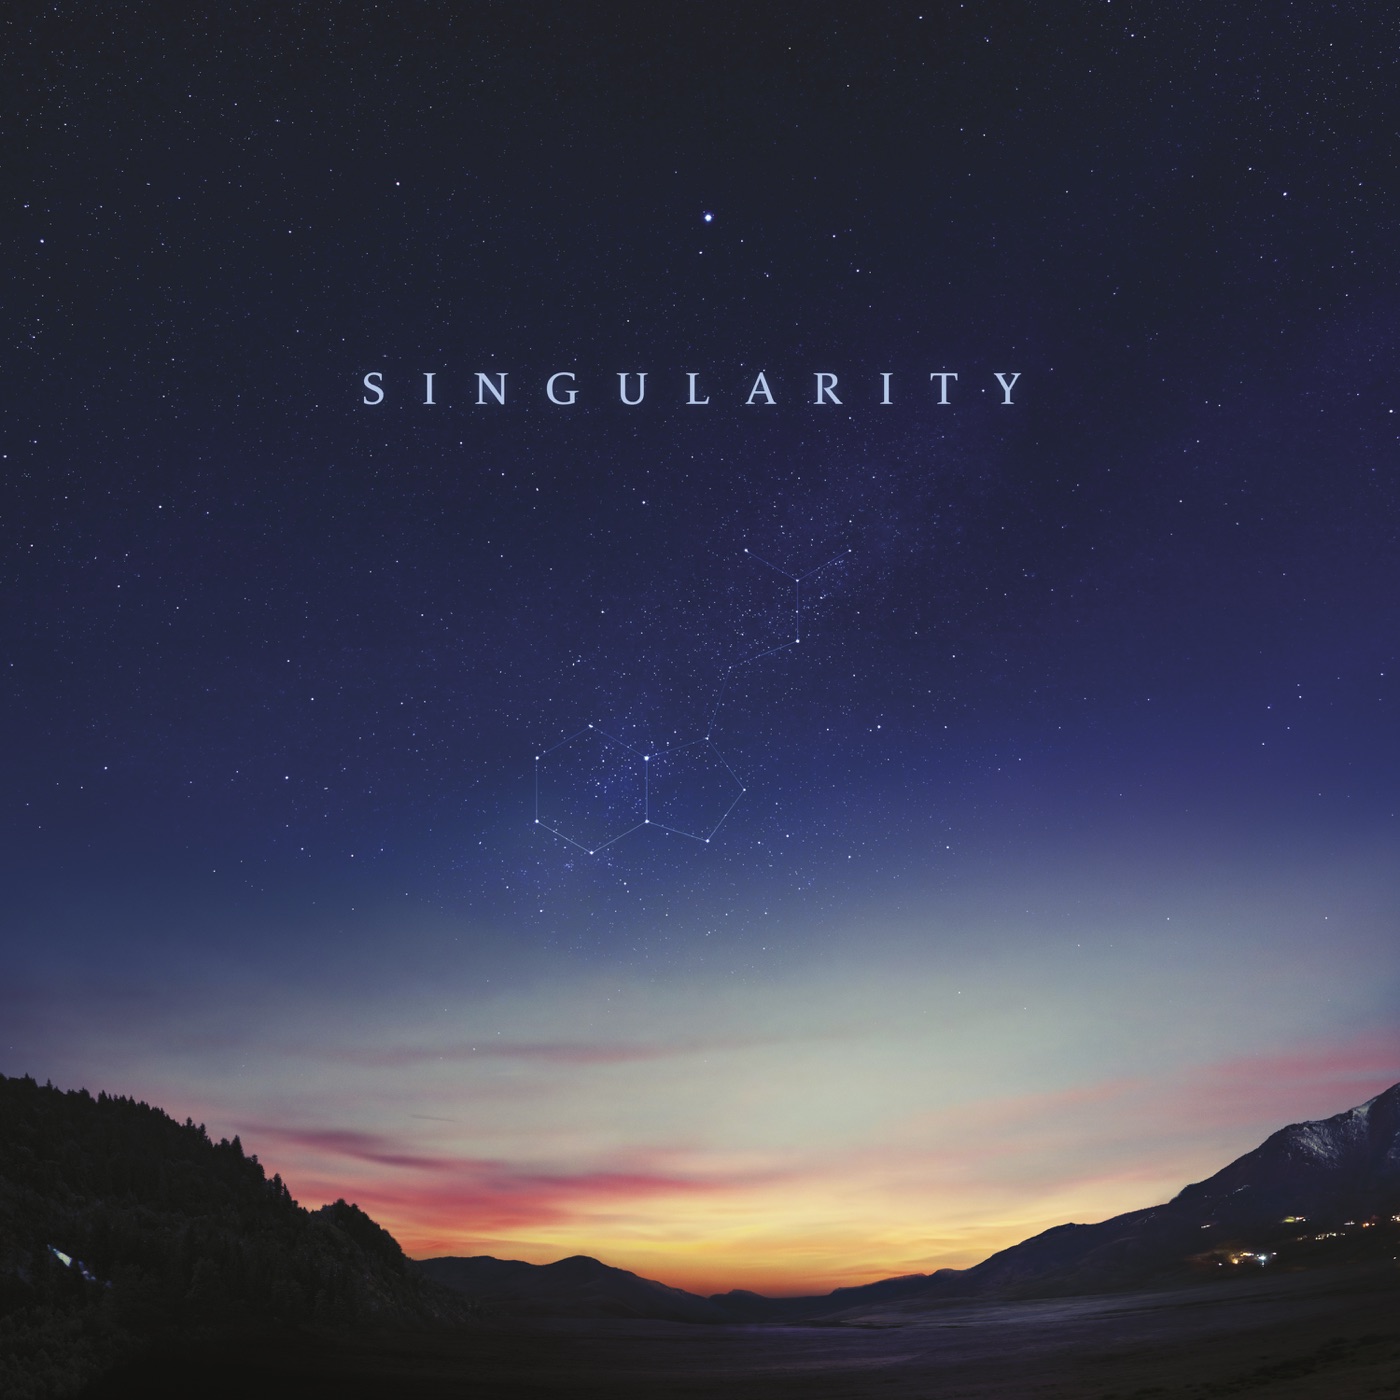 Singularity by Jon Hopkins, Singularity